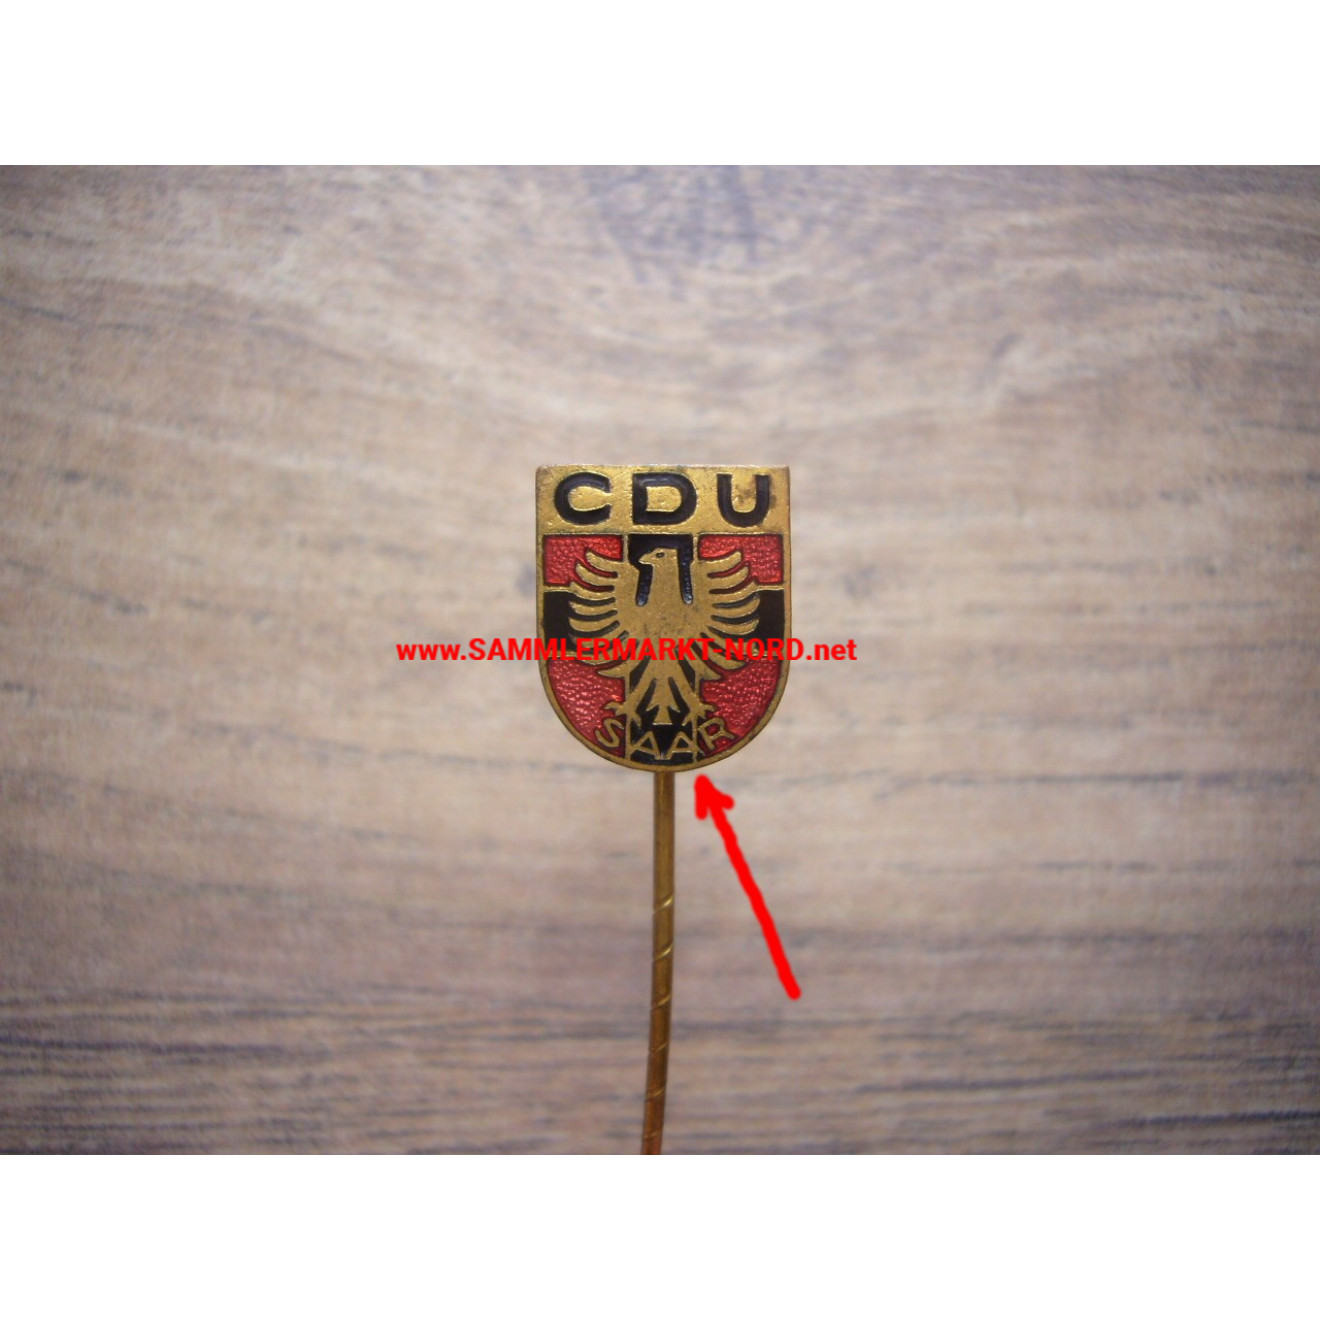 CDU Saarland - Christian Democratic Union of Germany - member pin